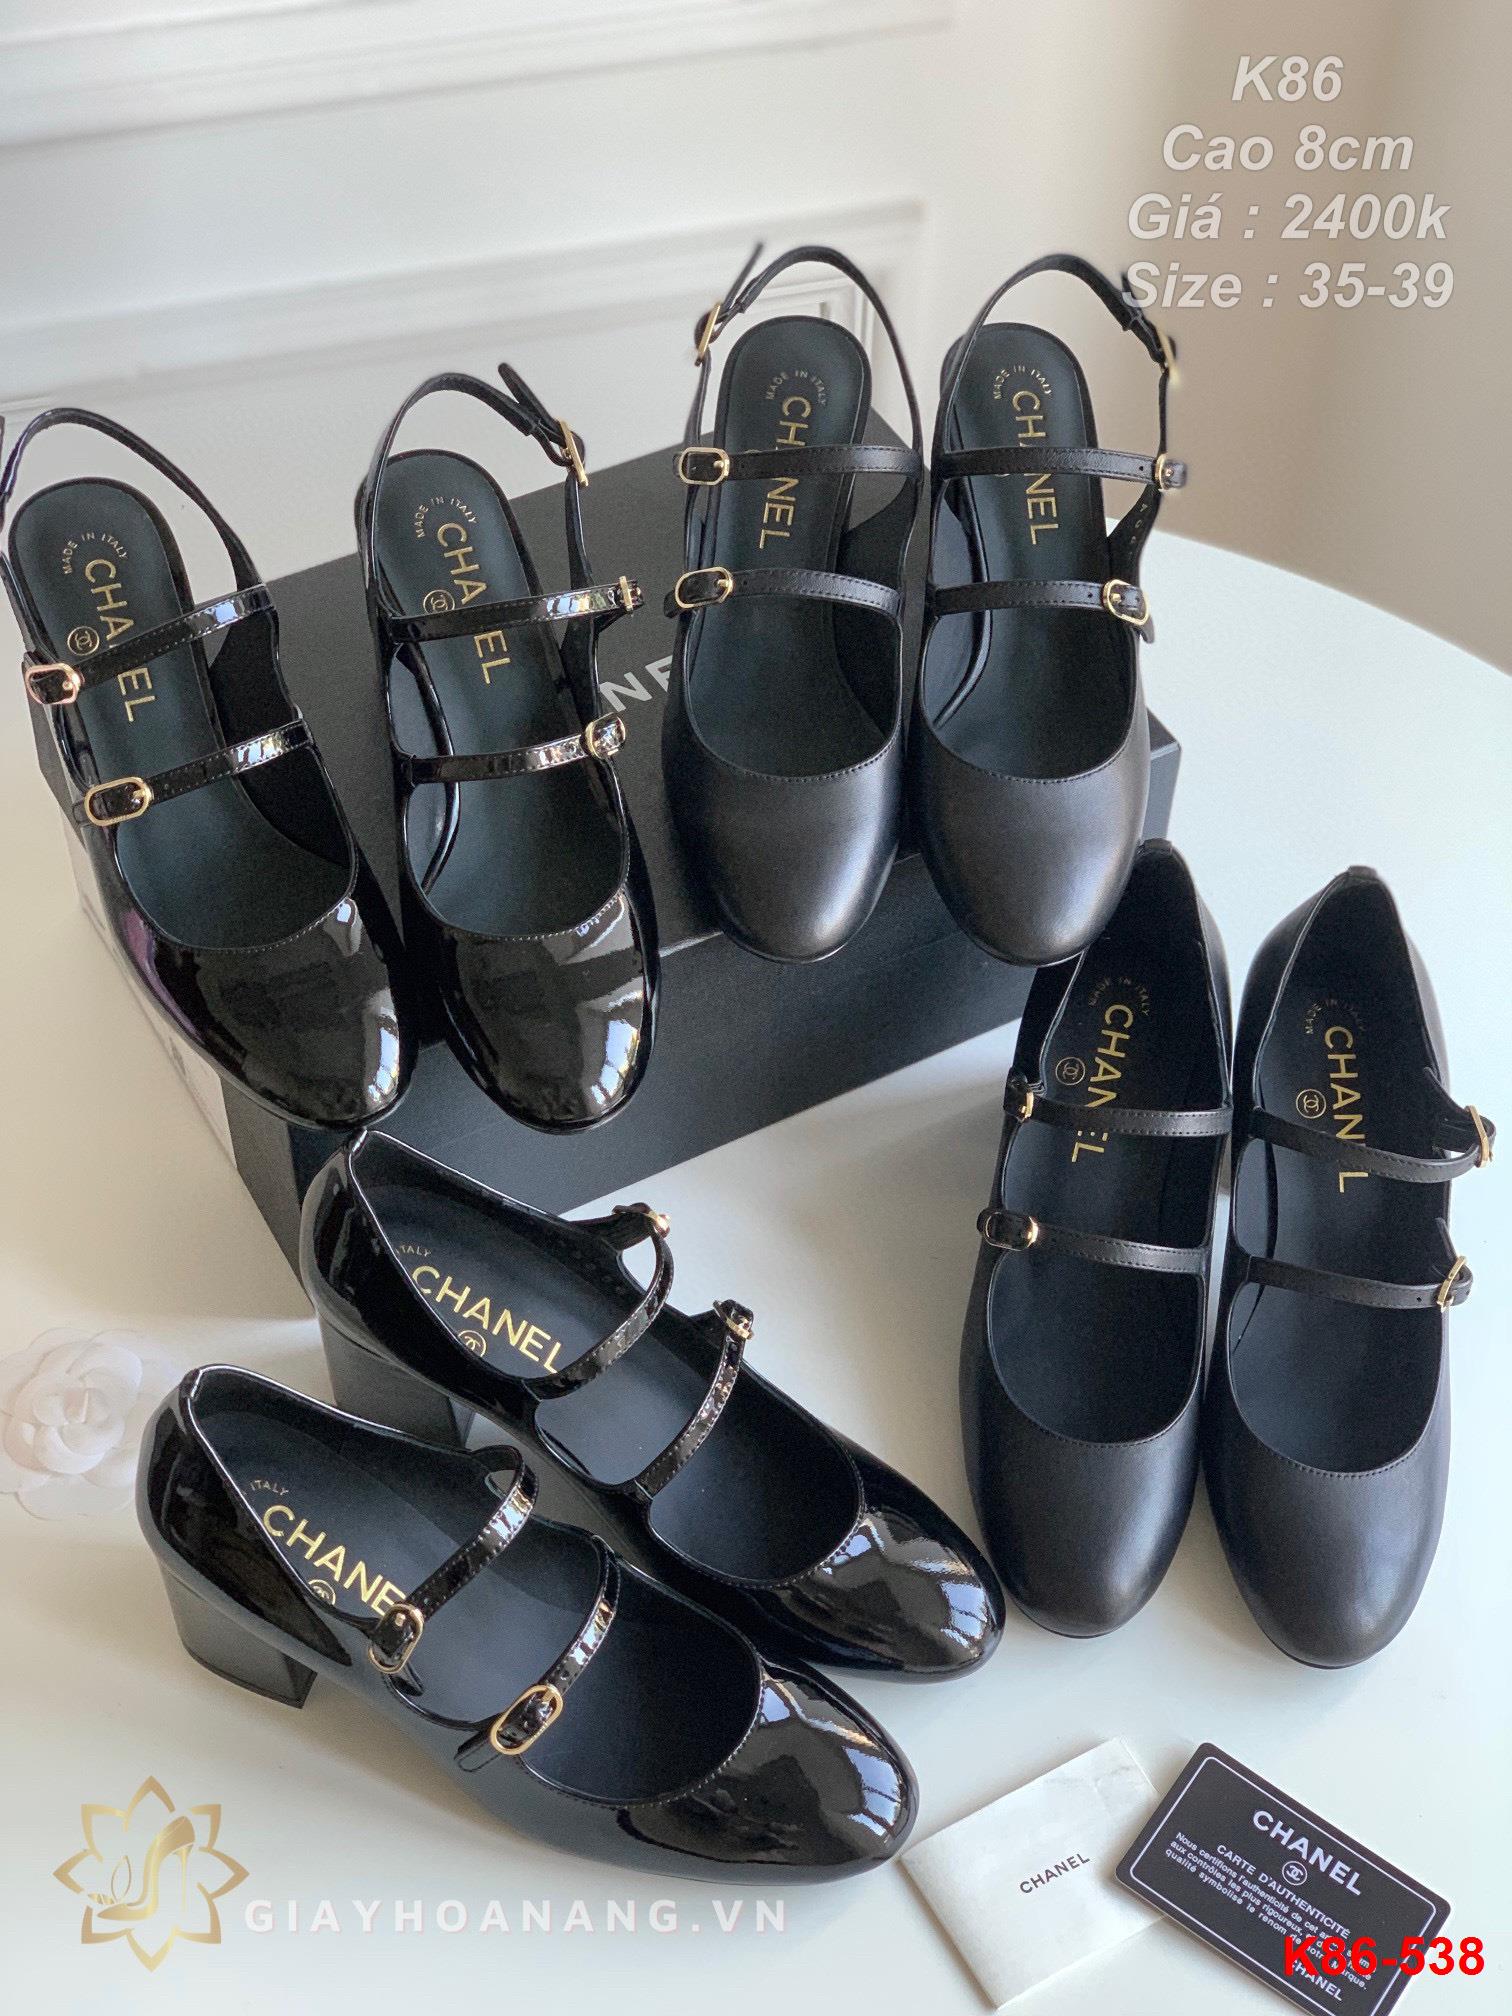 K86-538 Chanel giày cao 8cm siêu cấp